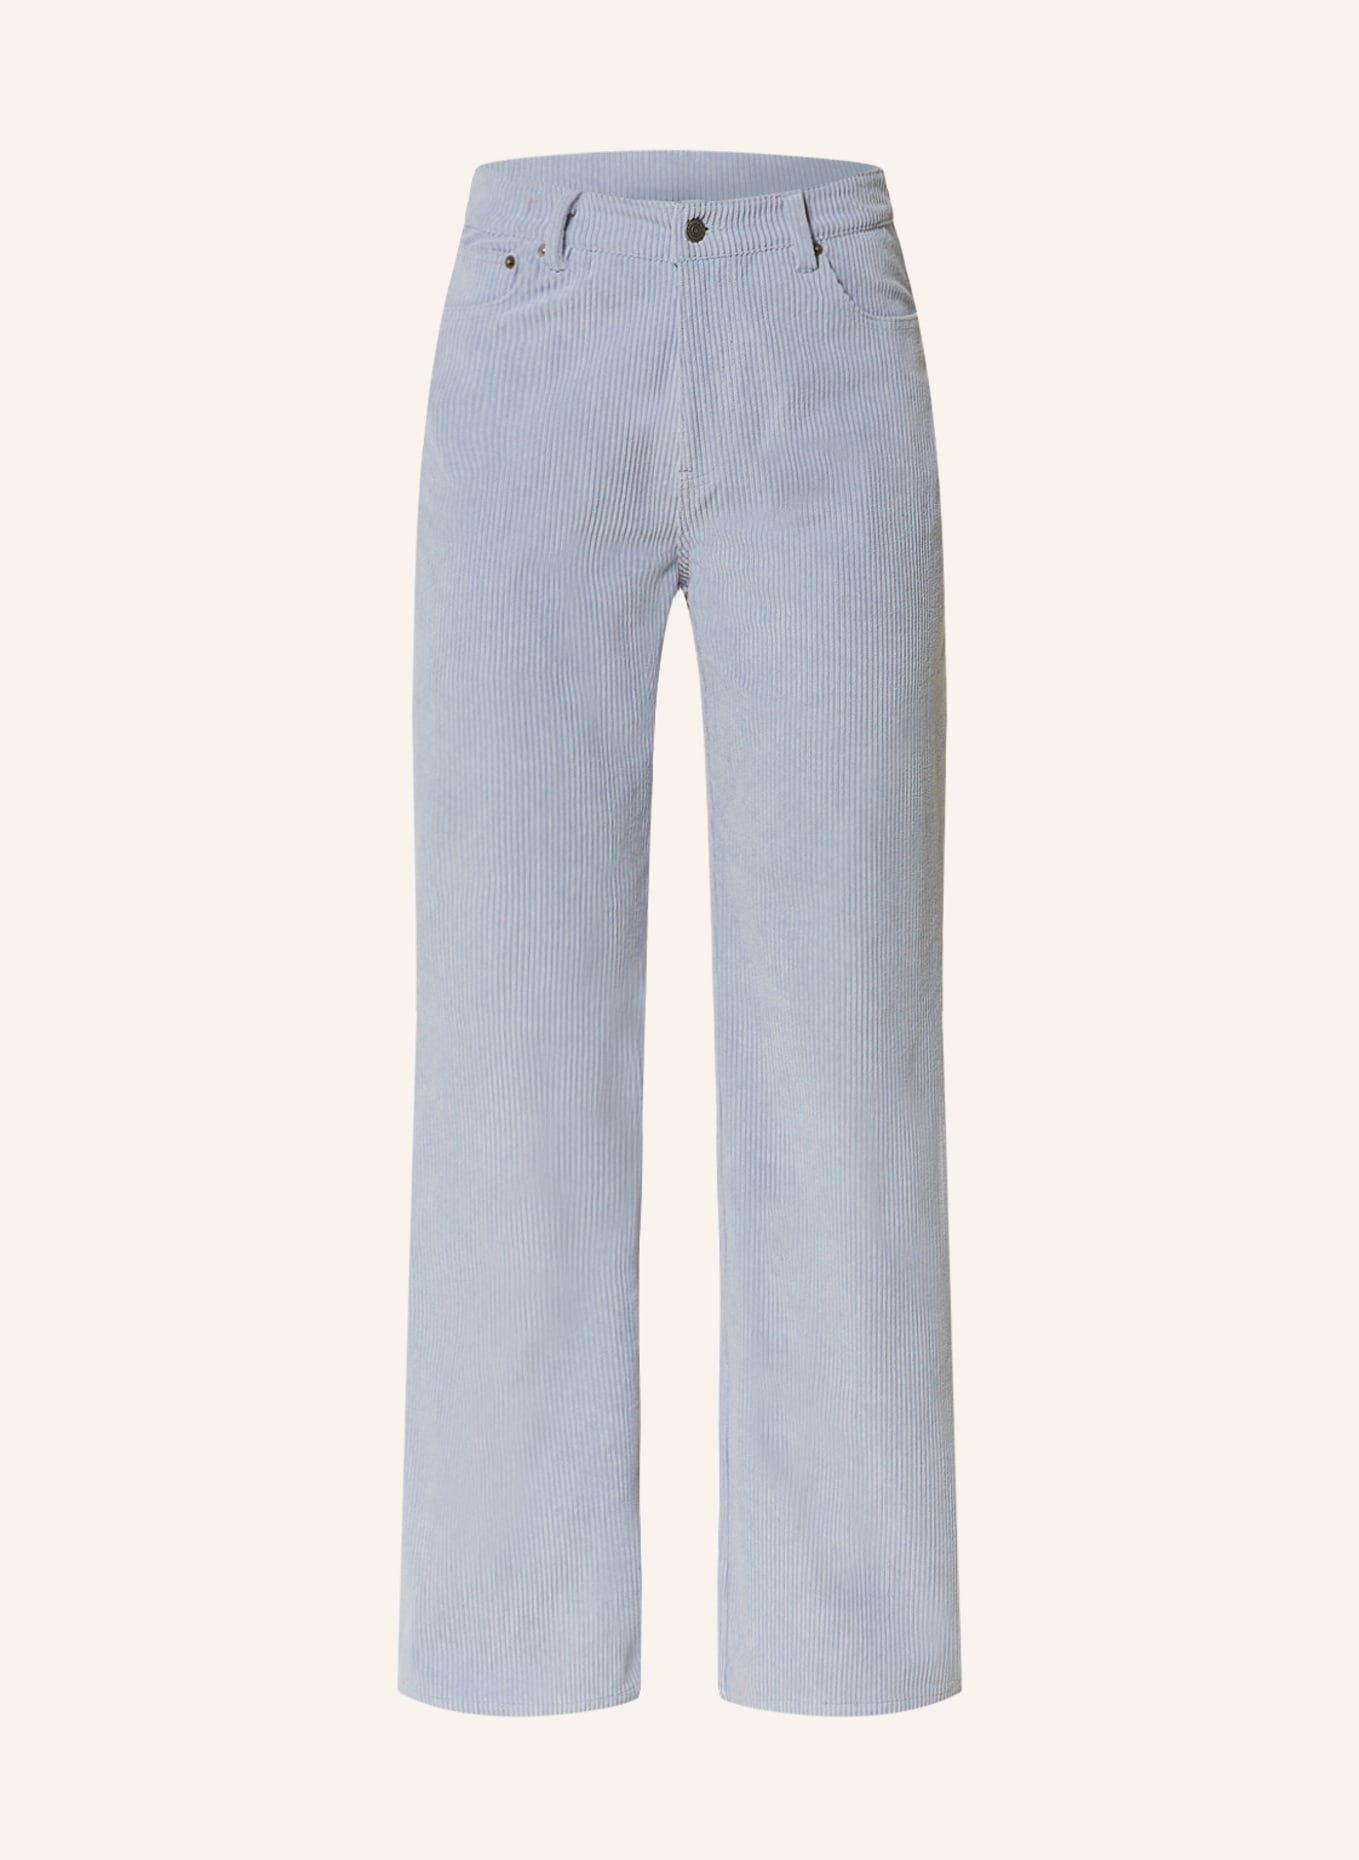 COLOURFUL REBEL Corduroy Trousers GAIAS, Color: BLUE GRAY (Image 1)